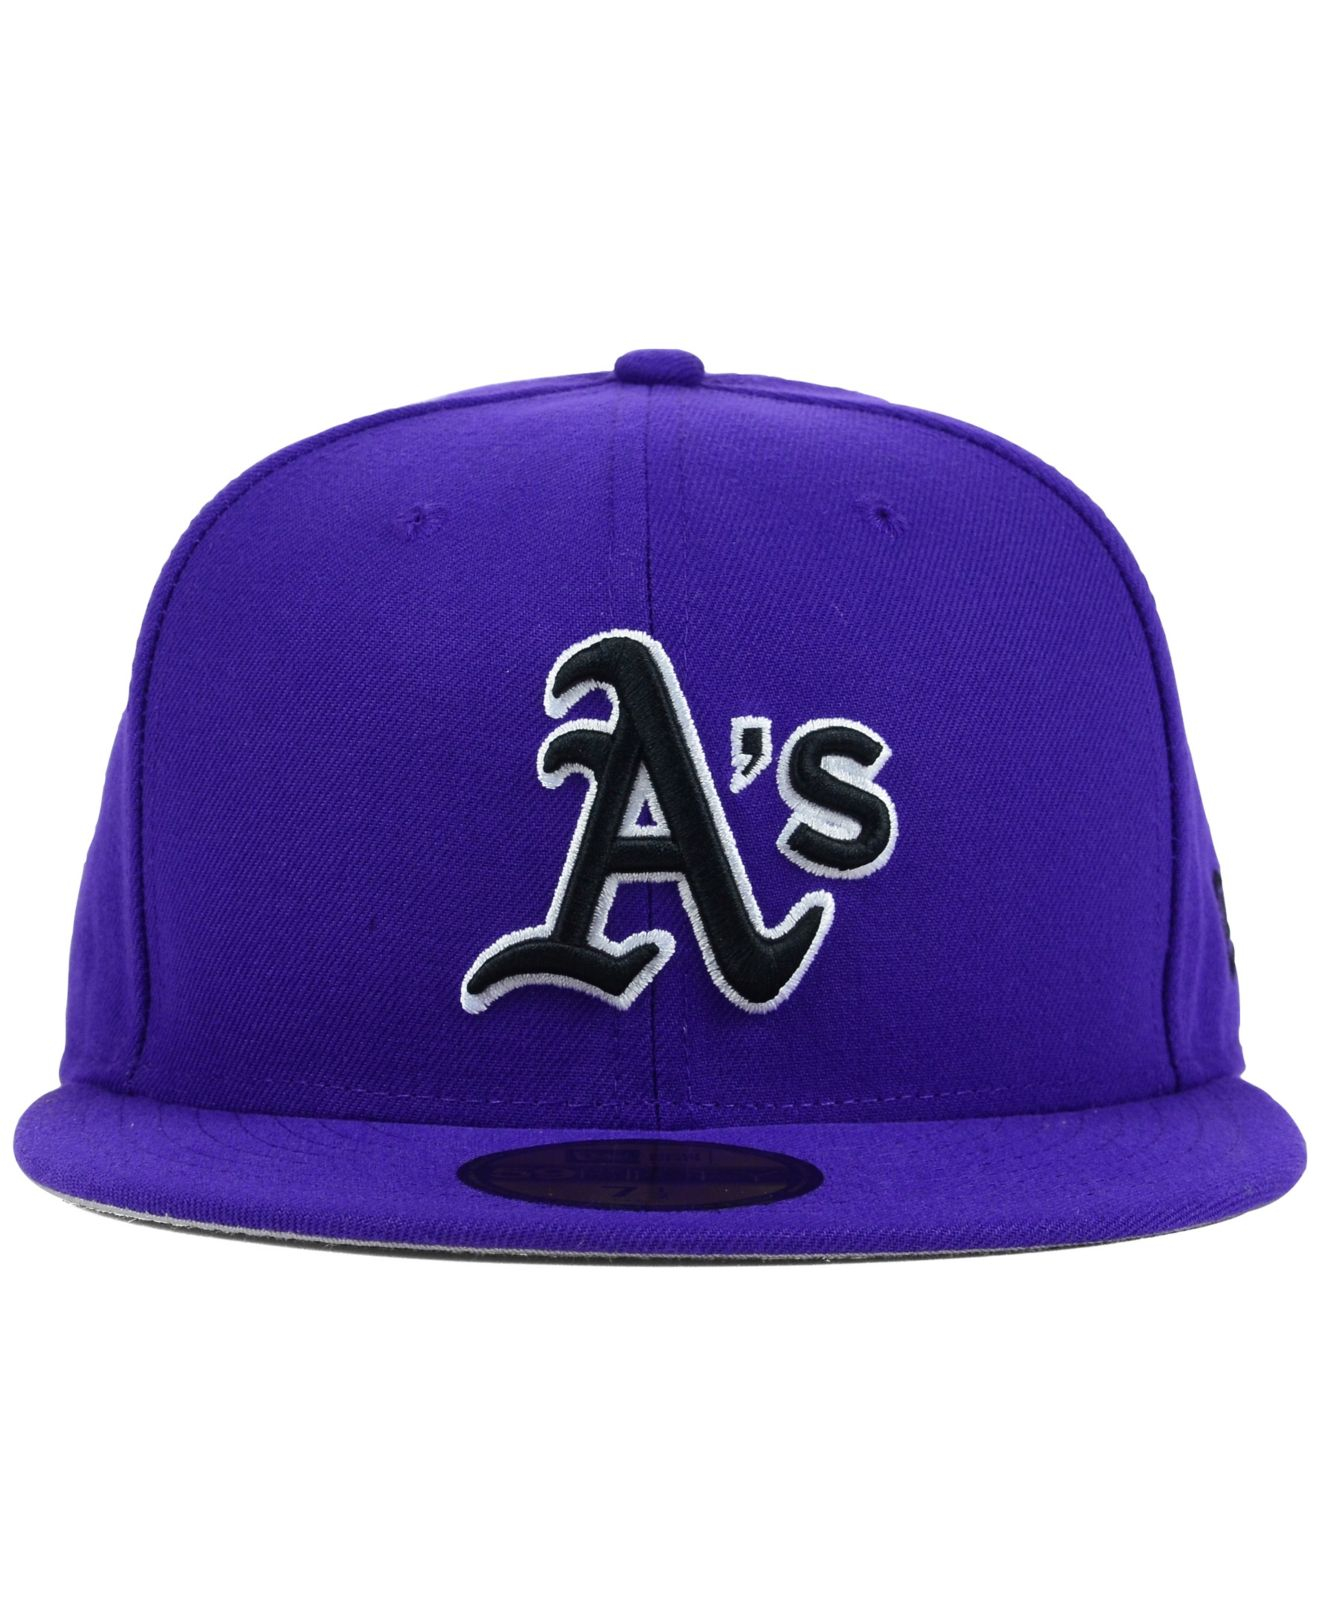 KTZ Oakland Athletics C-dub 59fifty Cap in Purple for Men